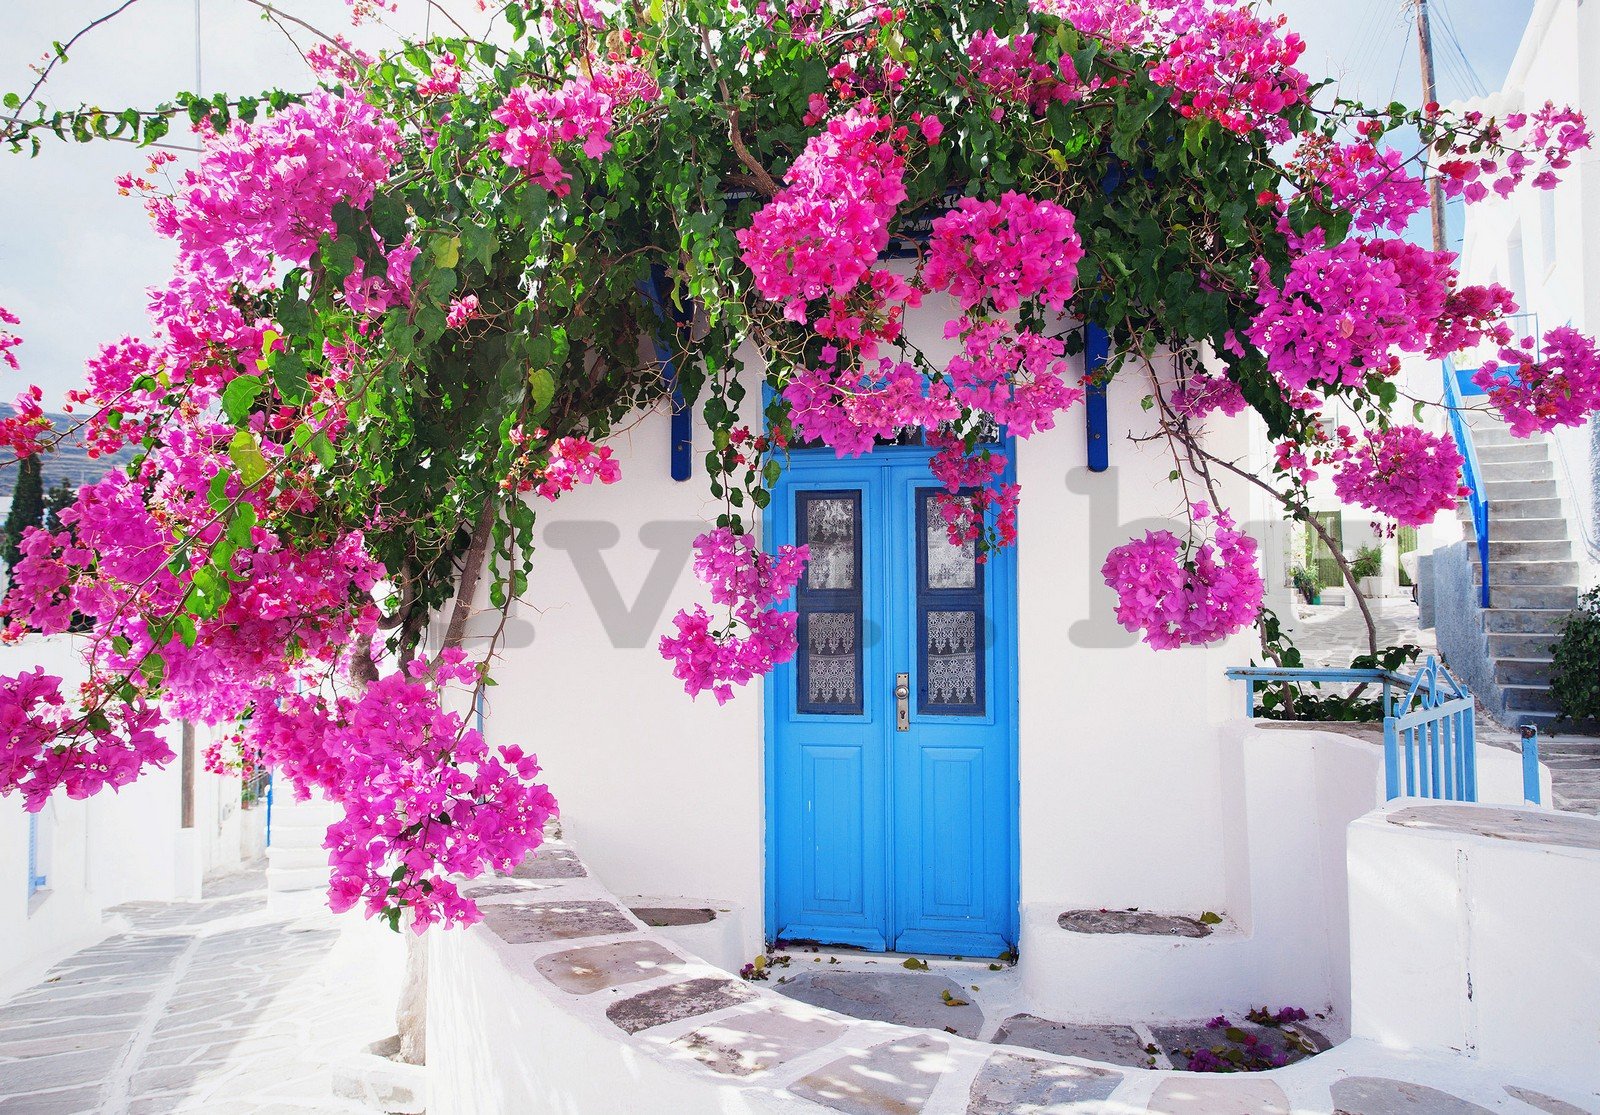 Vlies fotótapéta: Görög utcai virágok (1) - 416x254 cm